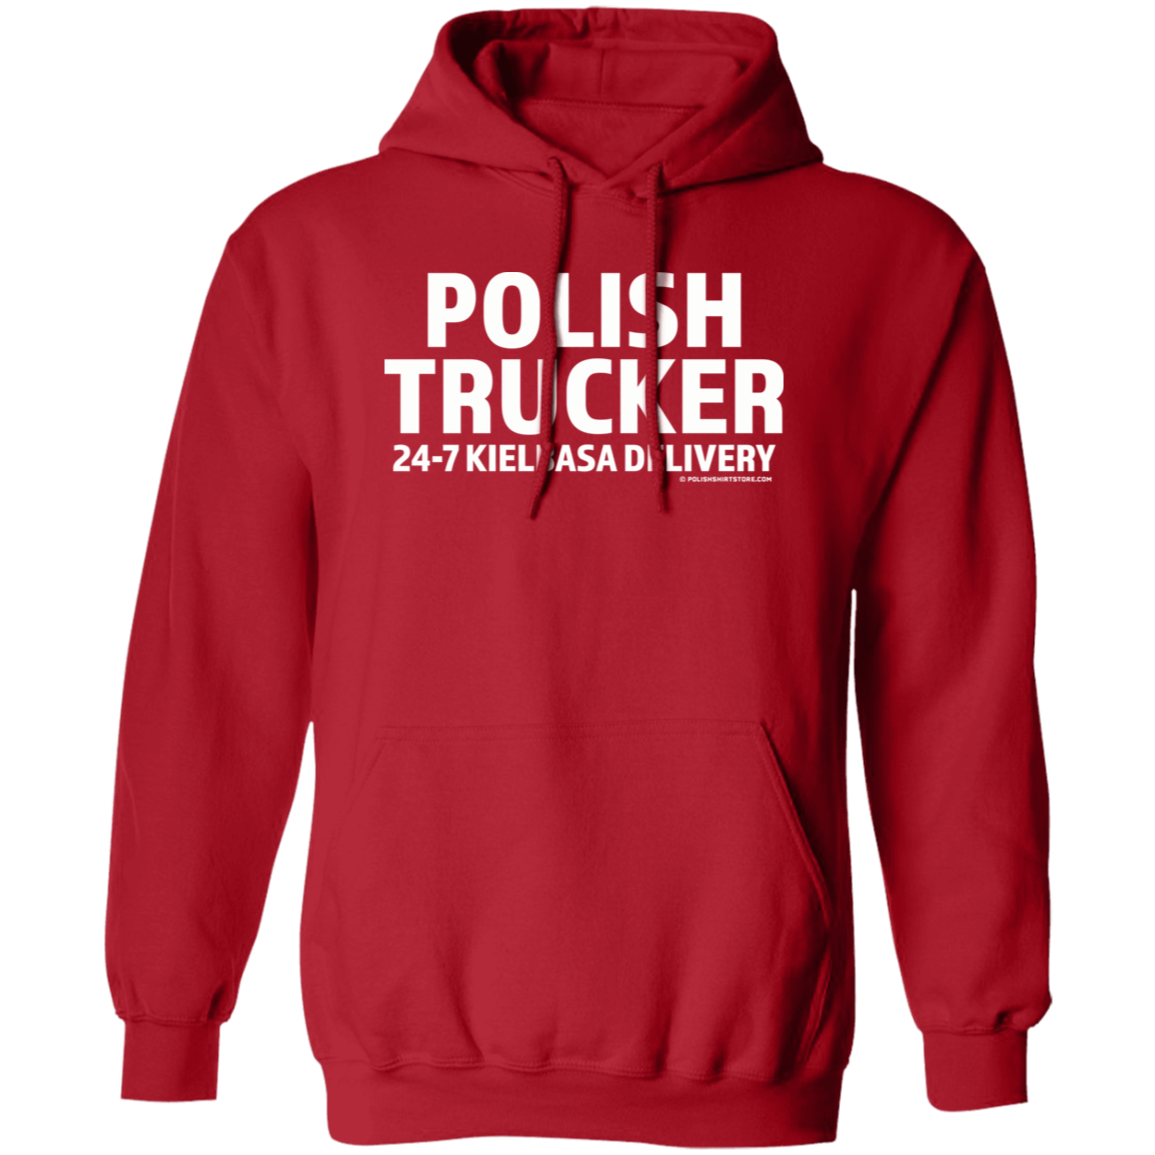 Polish Trucker 24-7 Kielbasa Delivery Apparel CustomCat G185 Pullover Hoodie Red S